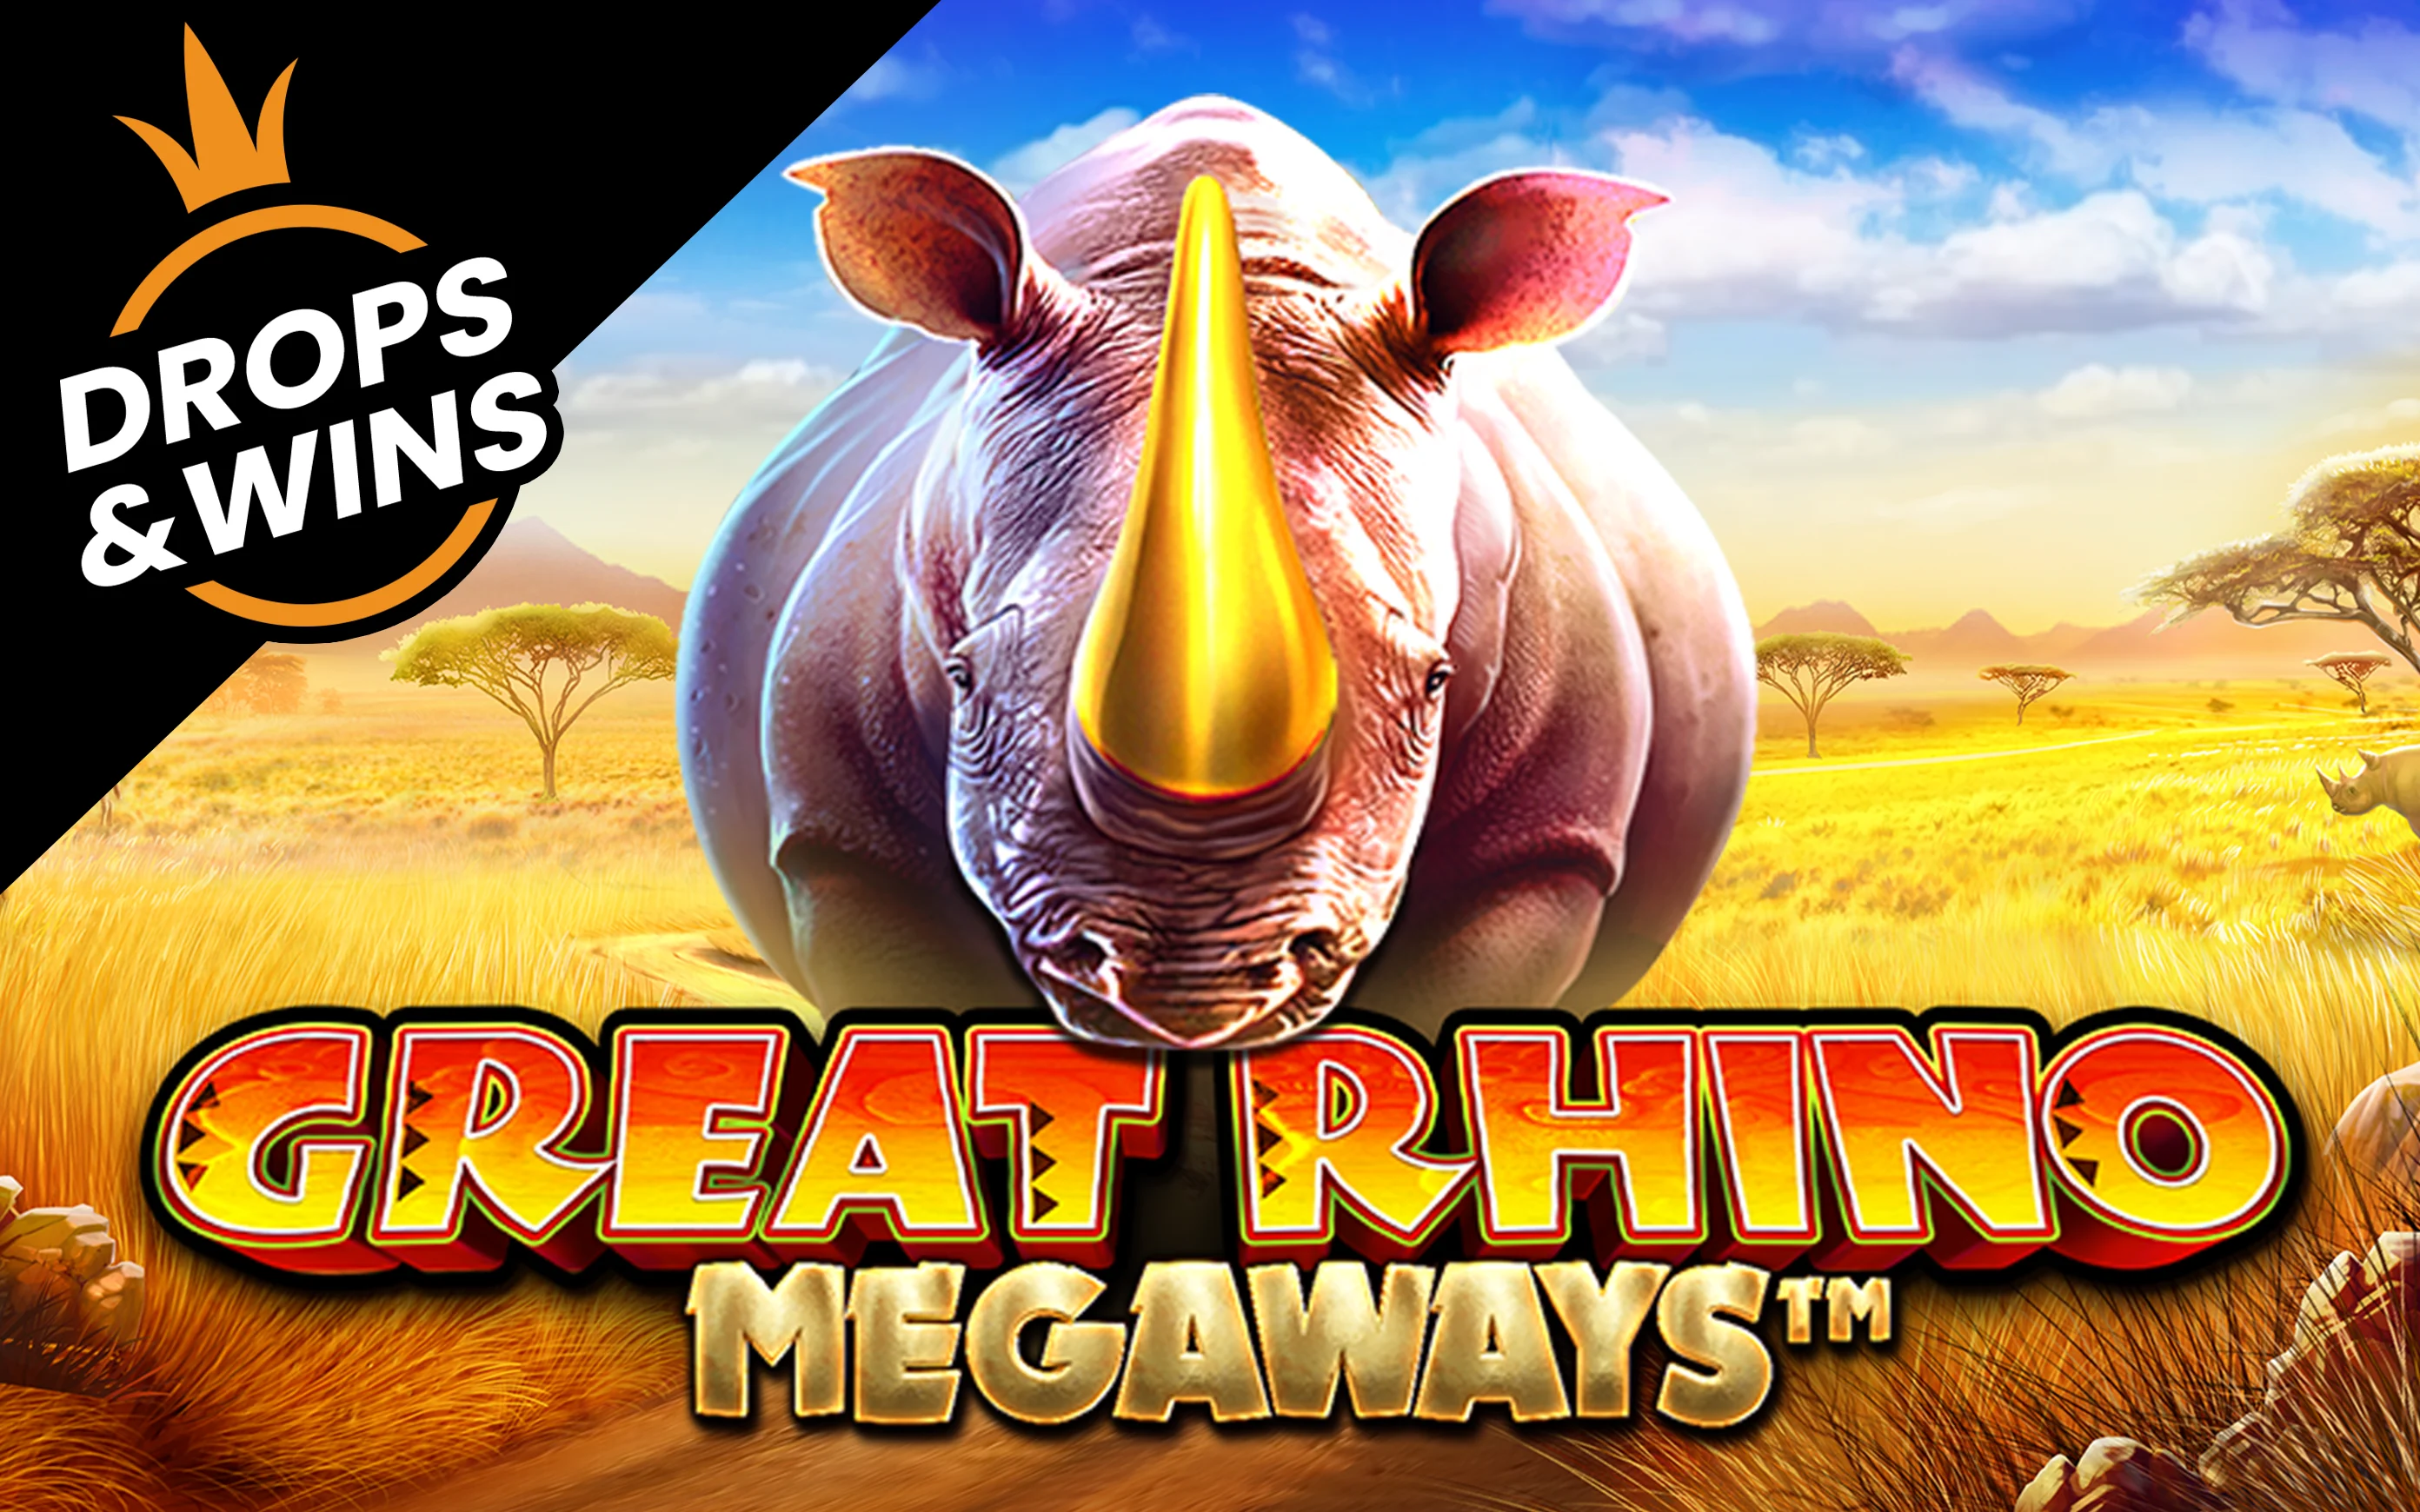 Gioca a Great Rhino Megaways™ sul casino online Starcasino.be